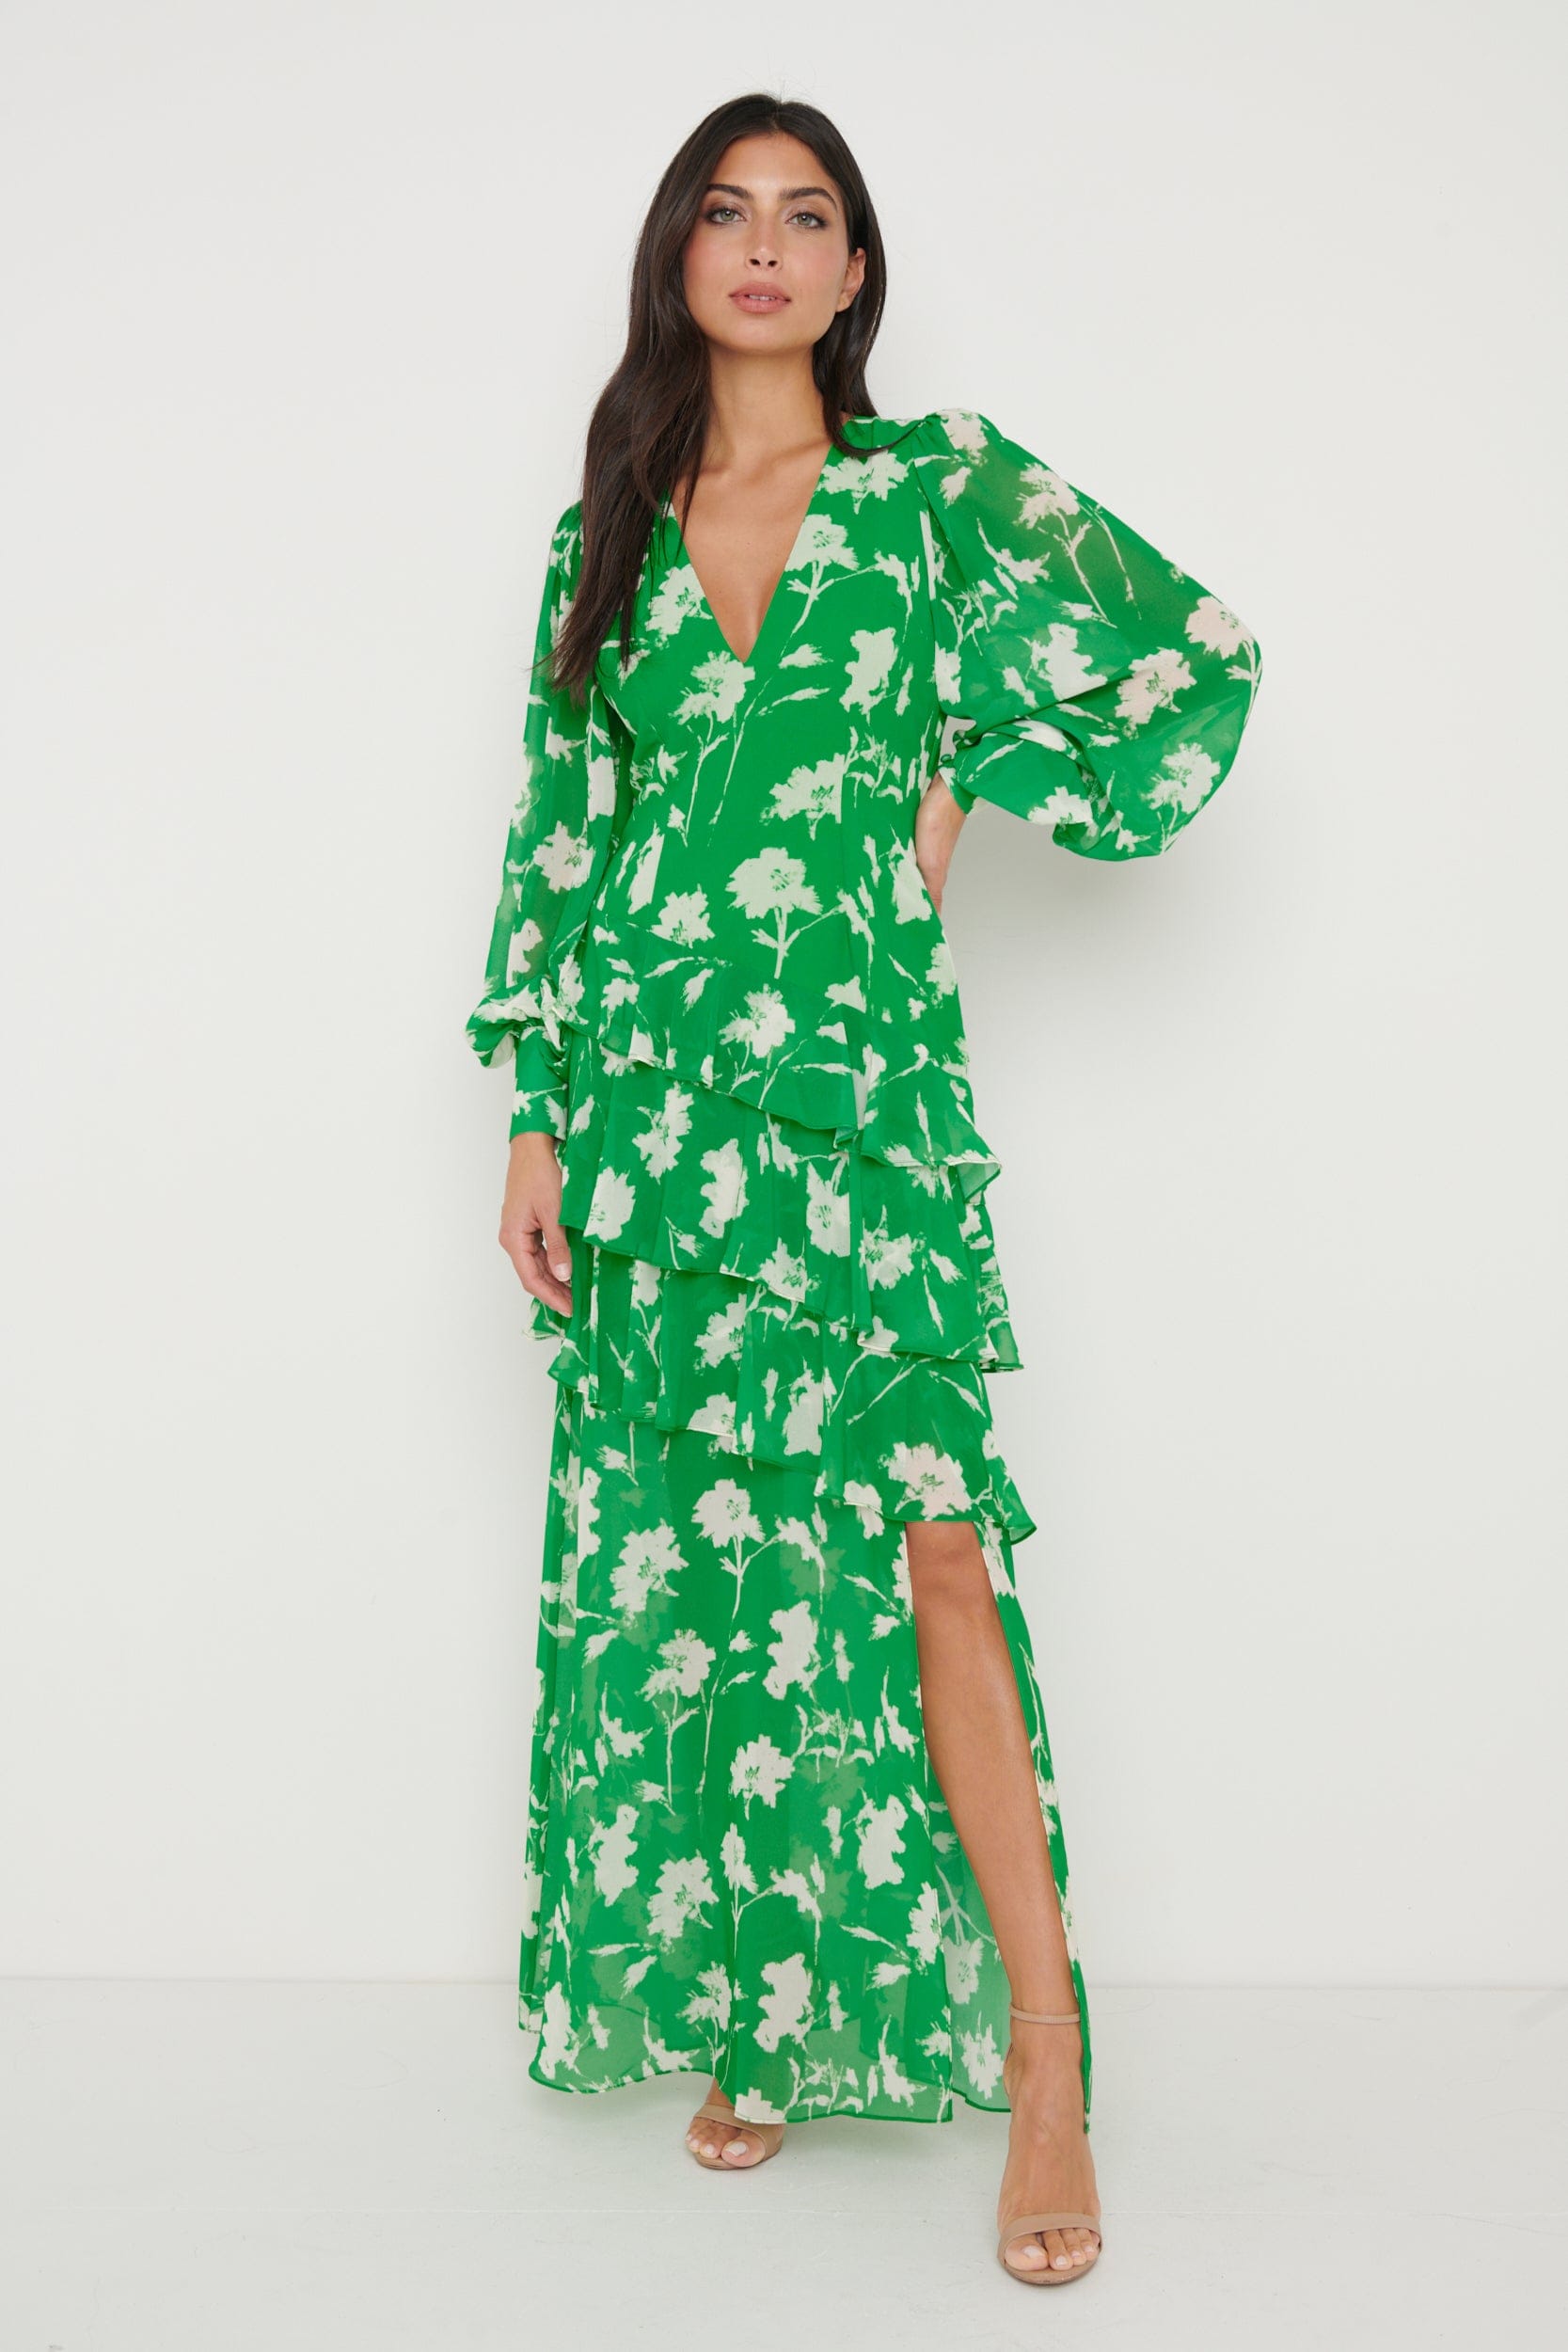 Sabrinna Backless Ruffle Dress - Green Floral, 10